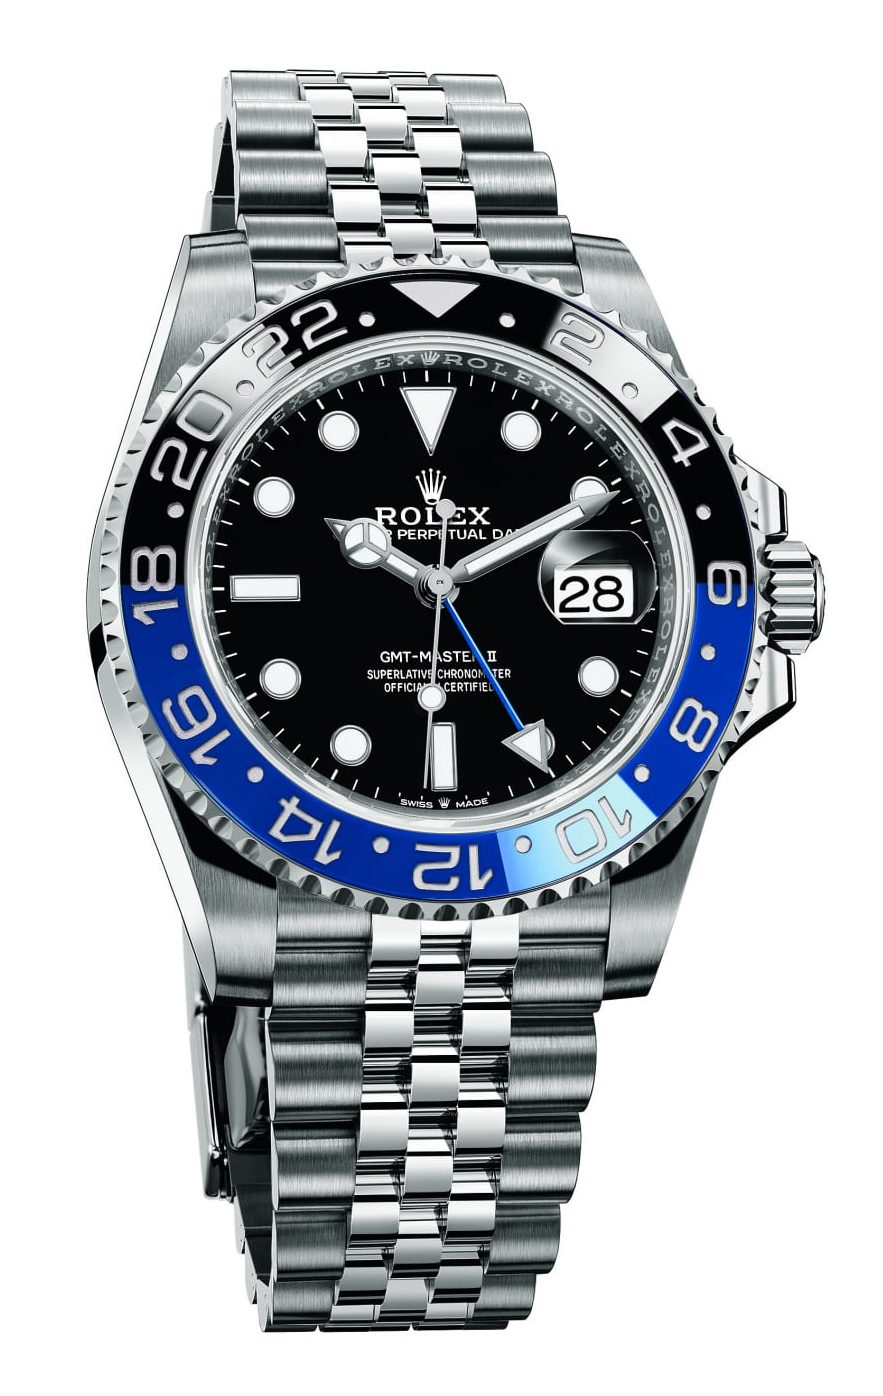 Rolex gmt master ii in black and blue e1640079432201